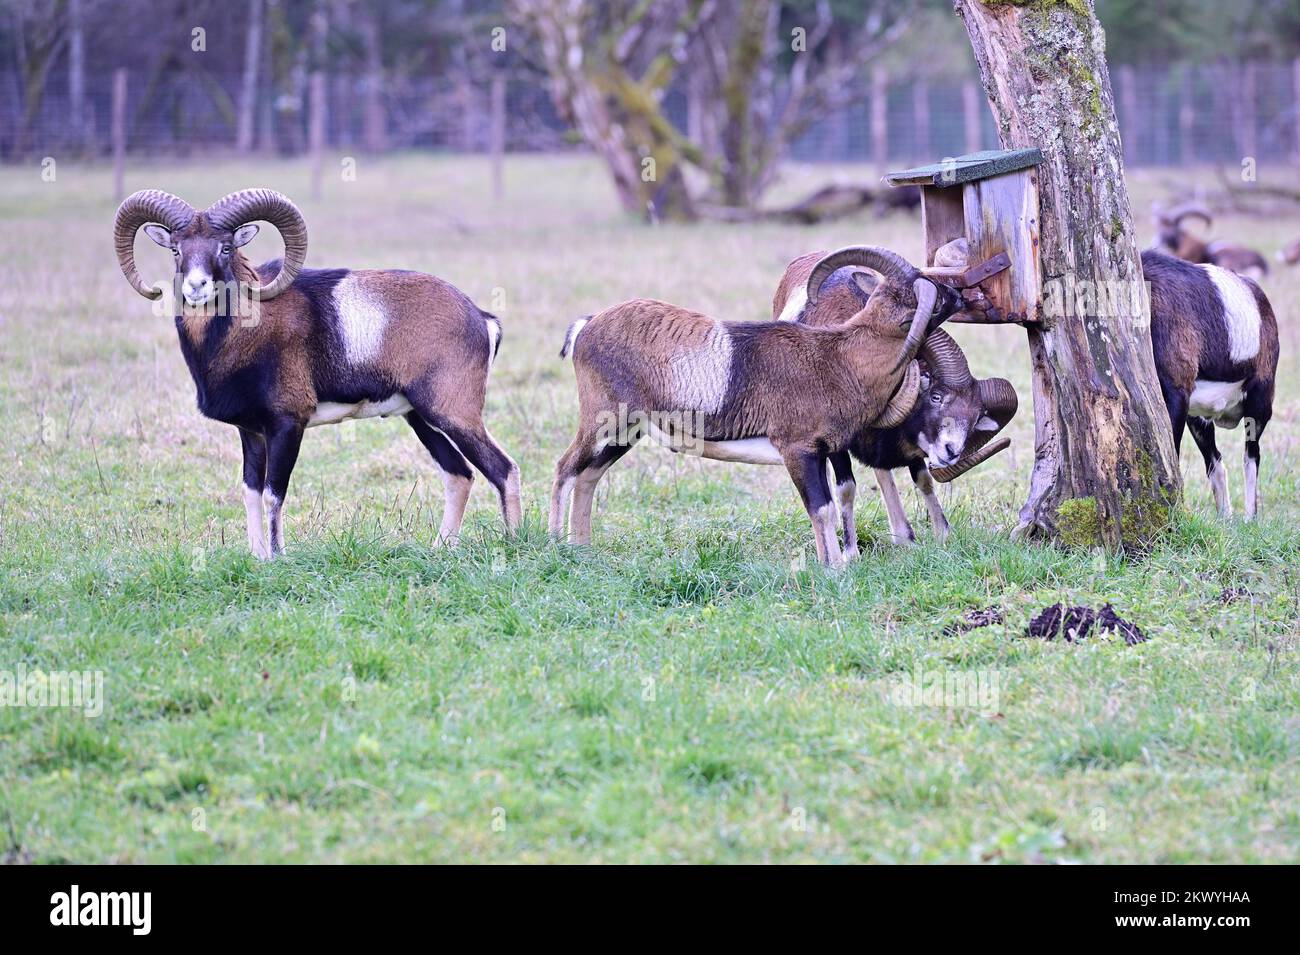 Cumberland Wildlife Park Grünau, Upper Austria, Austria. Mouflon (Ovis gmelini) Stock Photo